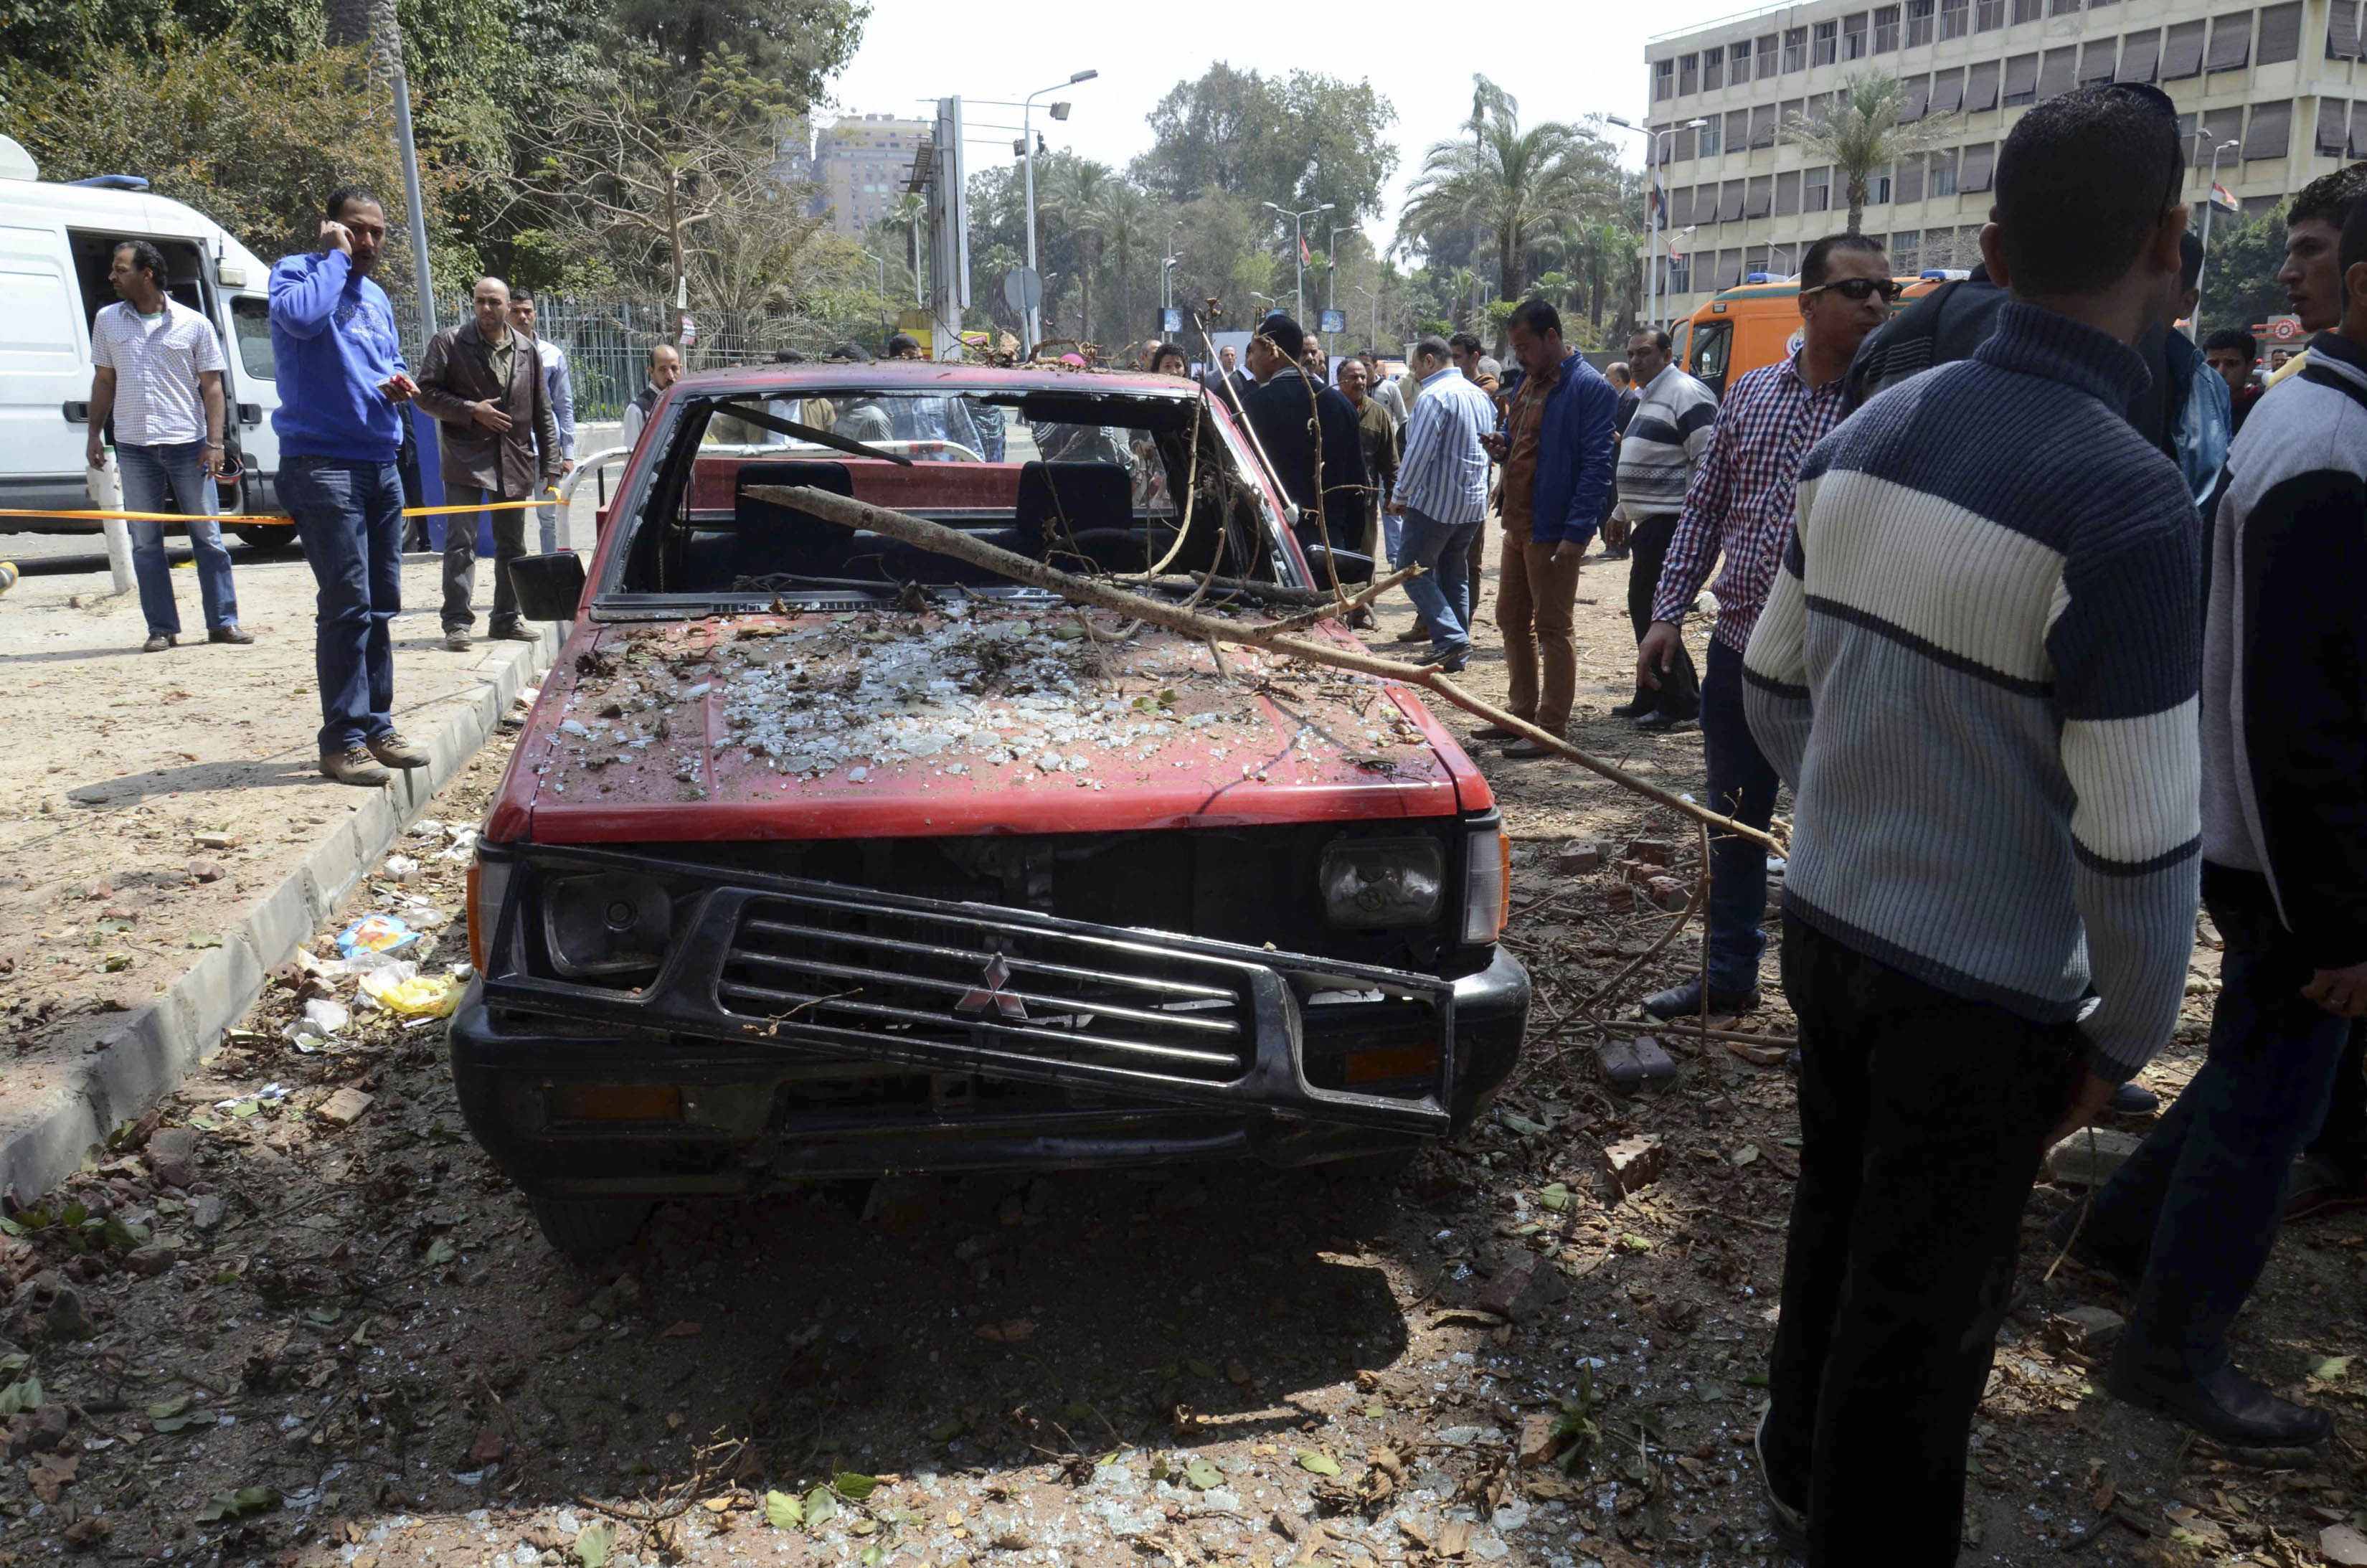 Policeman injured in explosion in Cairo's Heliopolis neighbourhood - state agency